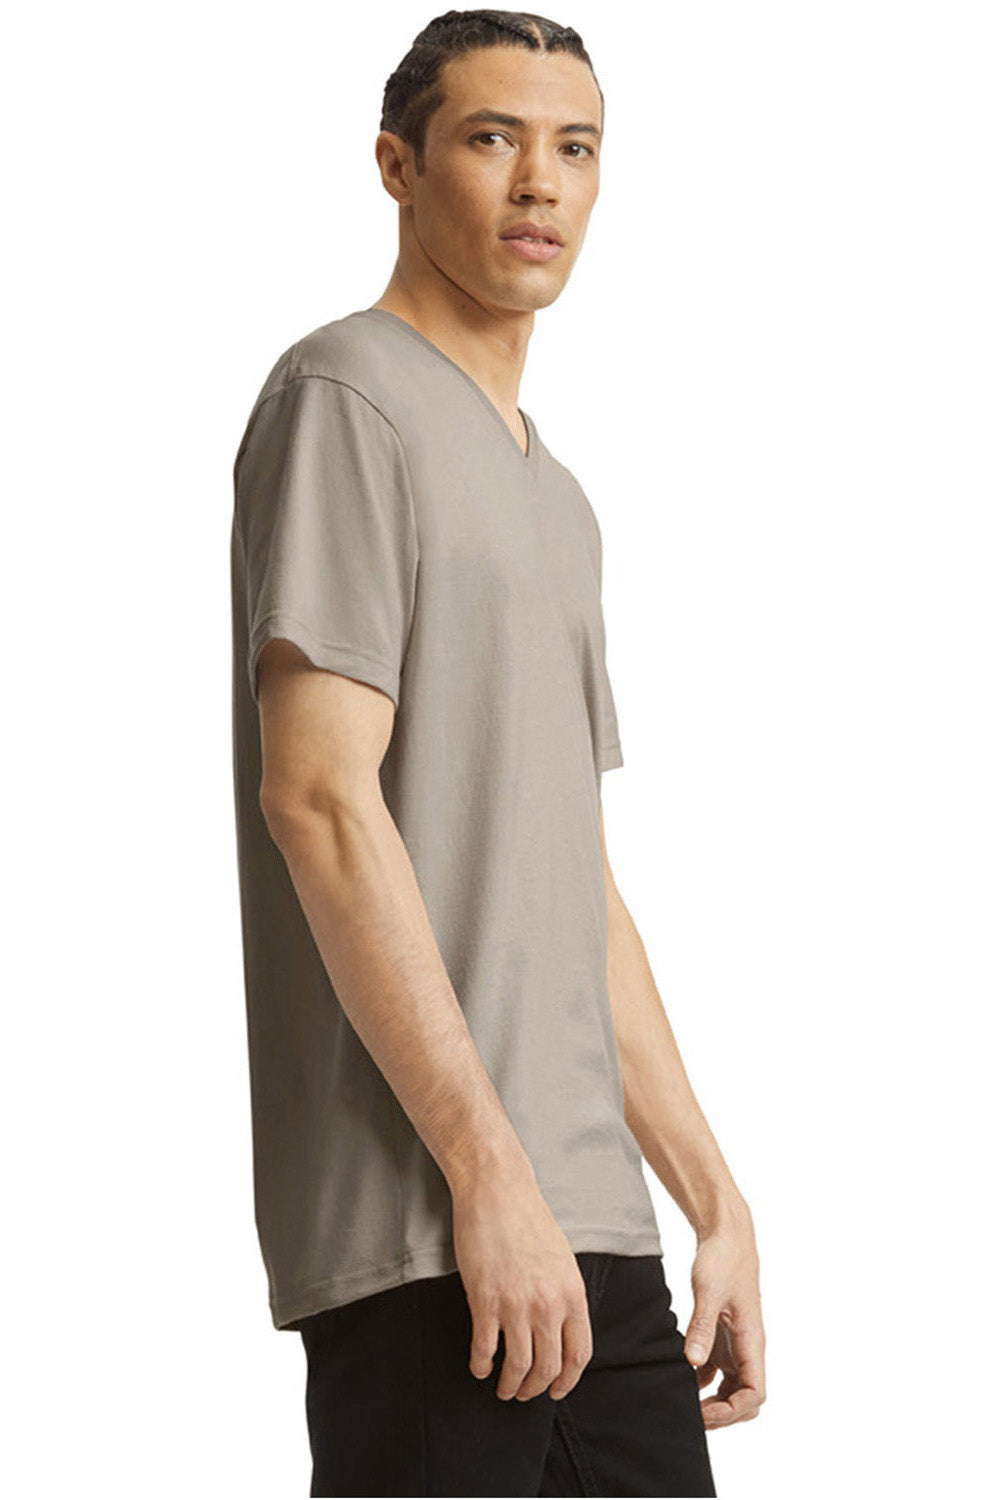 American Apparel 2006CVC Mens CVC Short Sleeve V-Neck T-Shirt Heather Khaki Model Side